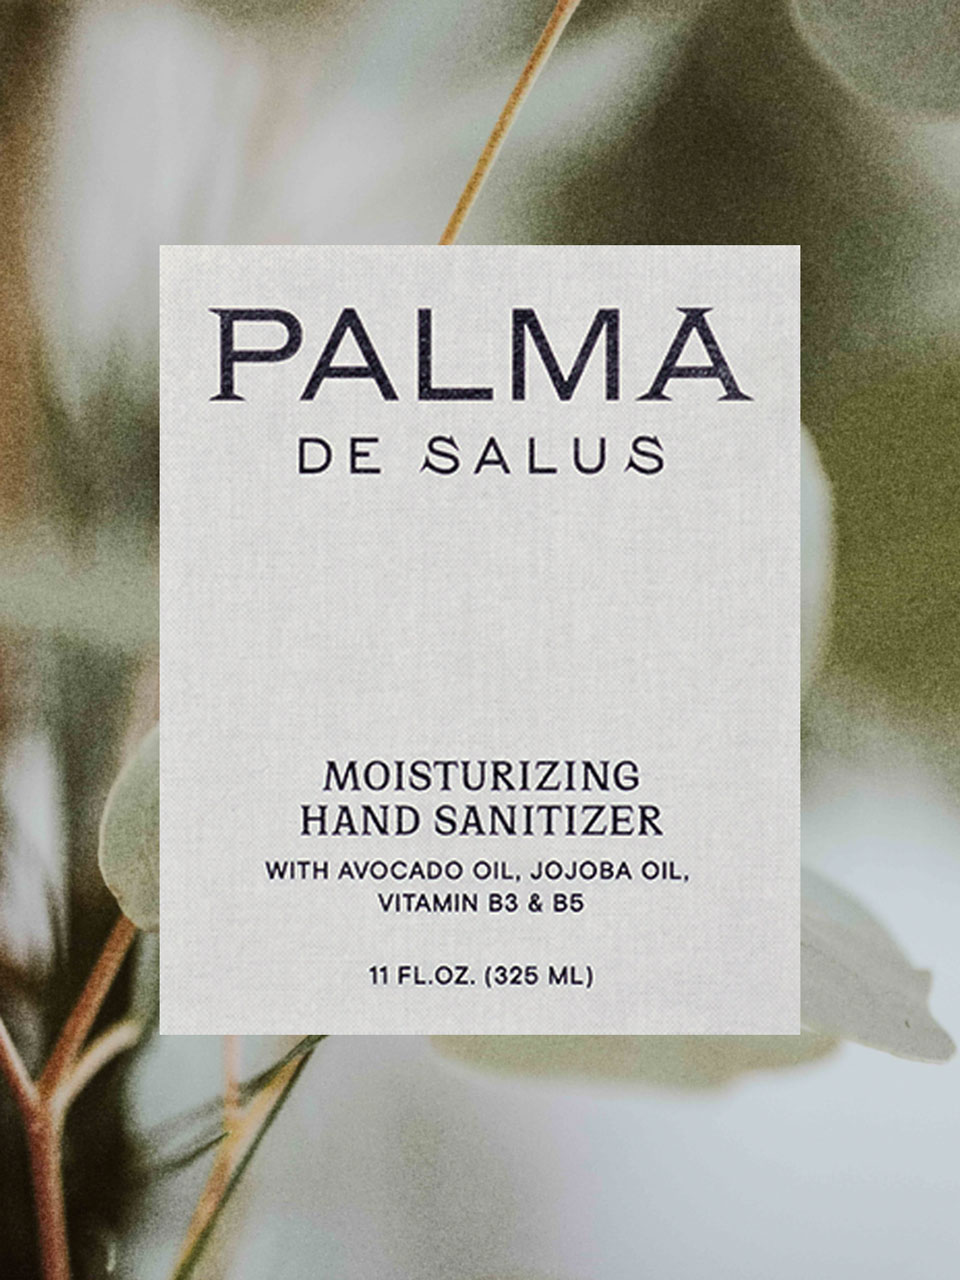 Palma de Salus Branding and Design by Colony